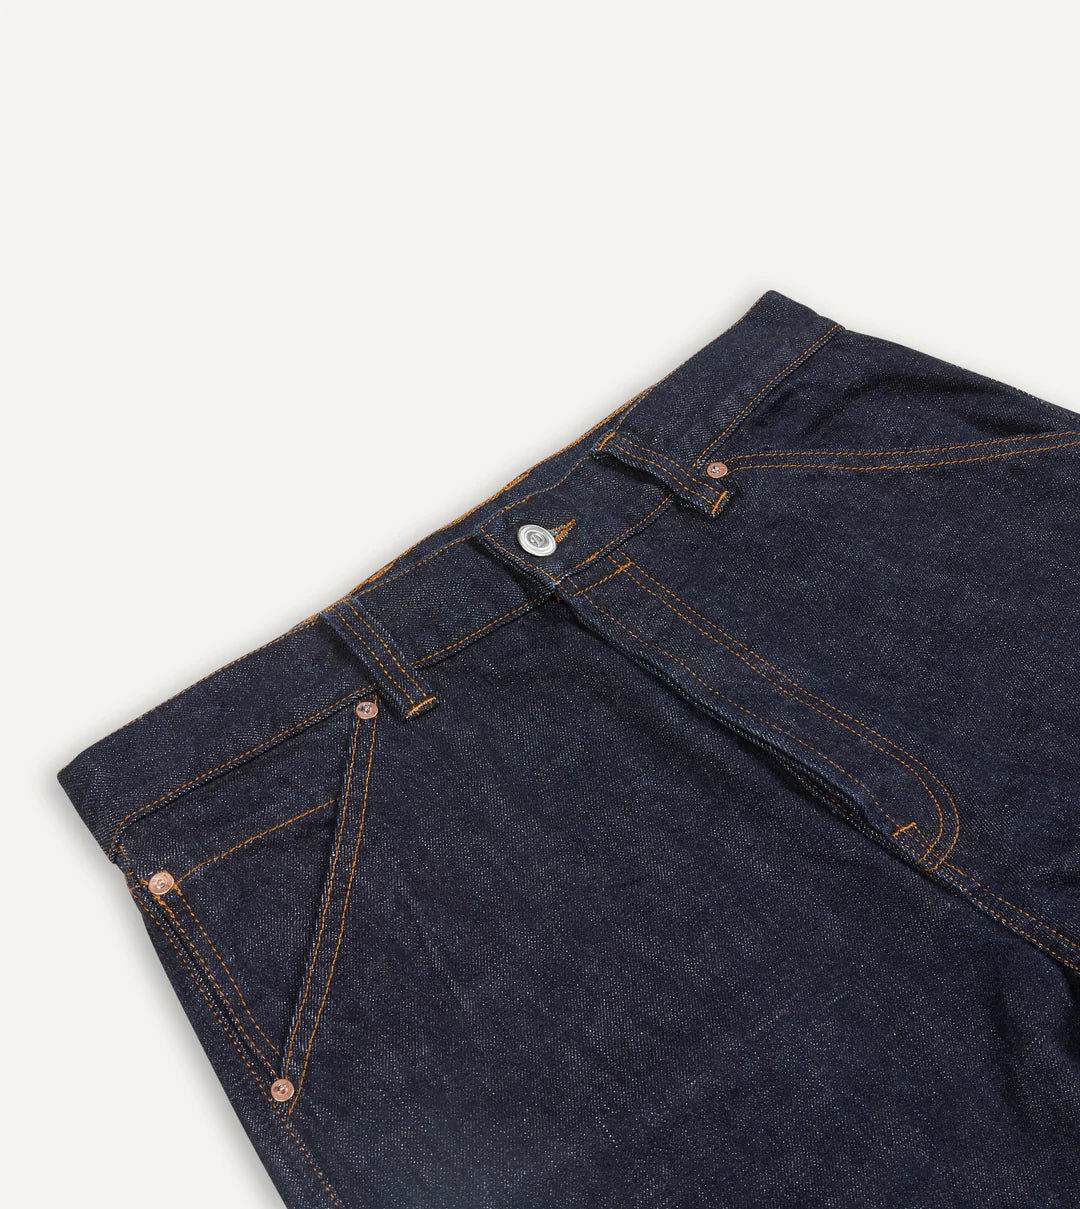 14.2oz Japanese Selvedge Denim Five-Pocket Jeans - Indigo Rinse